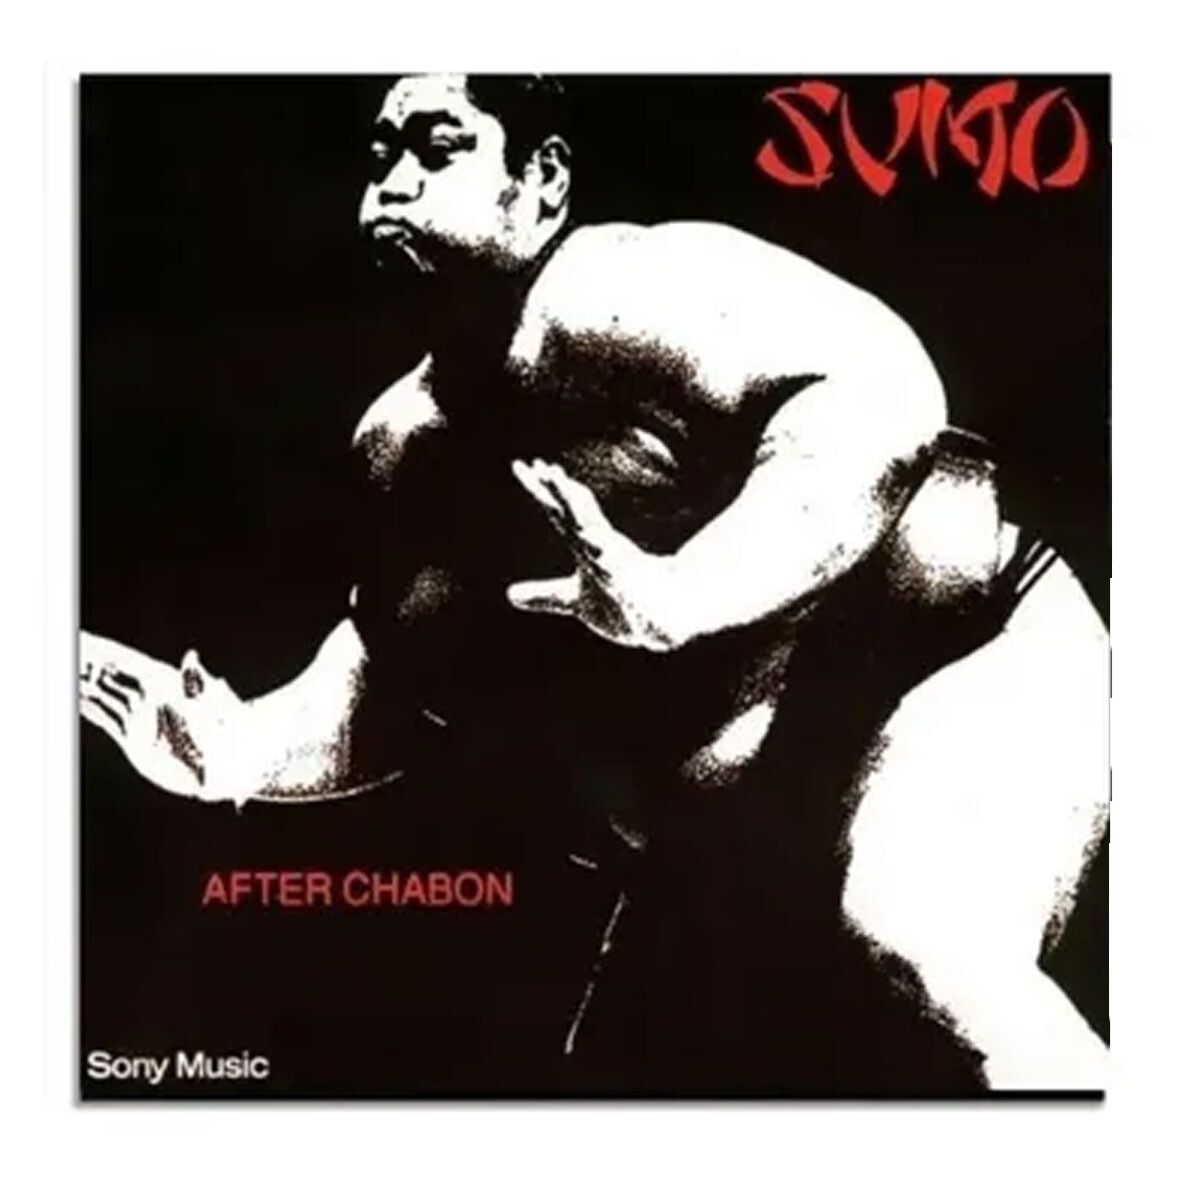 Sumo-after Chabon - Vinilo 